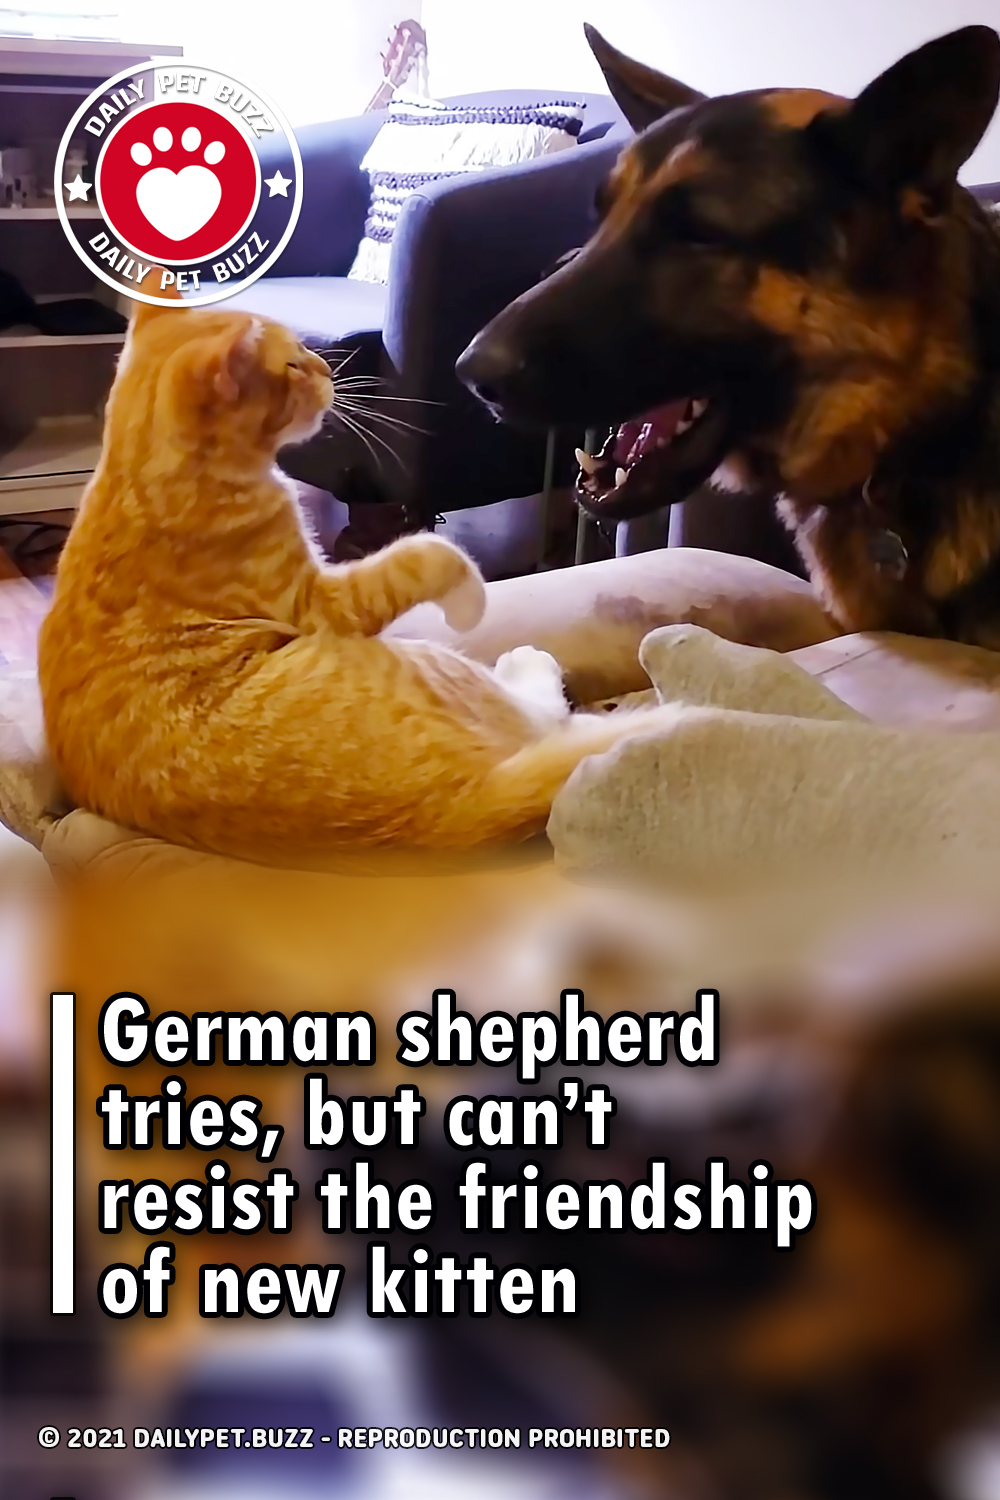 German shepherd tries, but can’t resist the friendship of new kitten